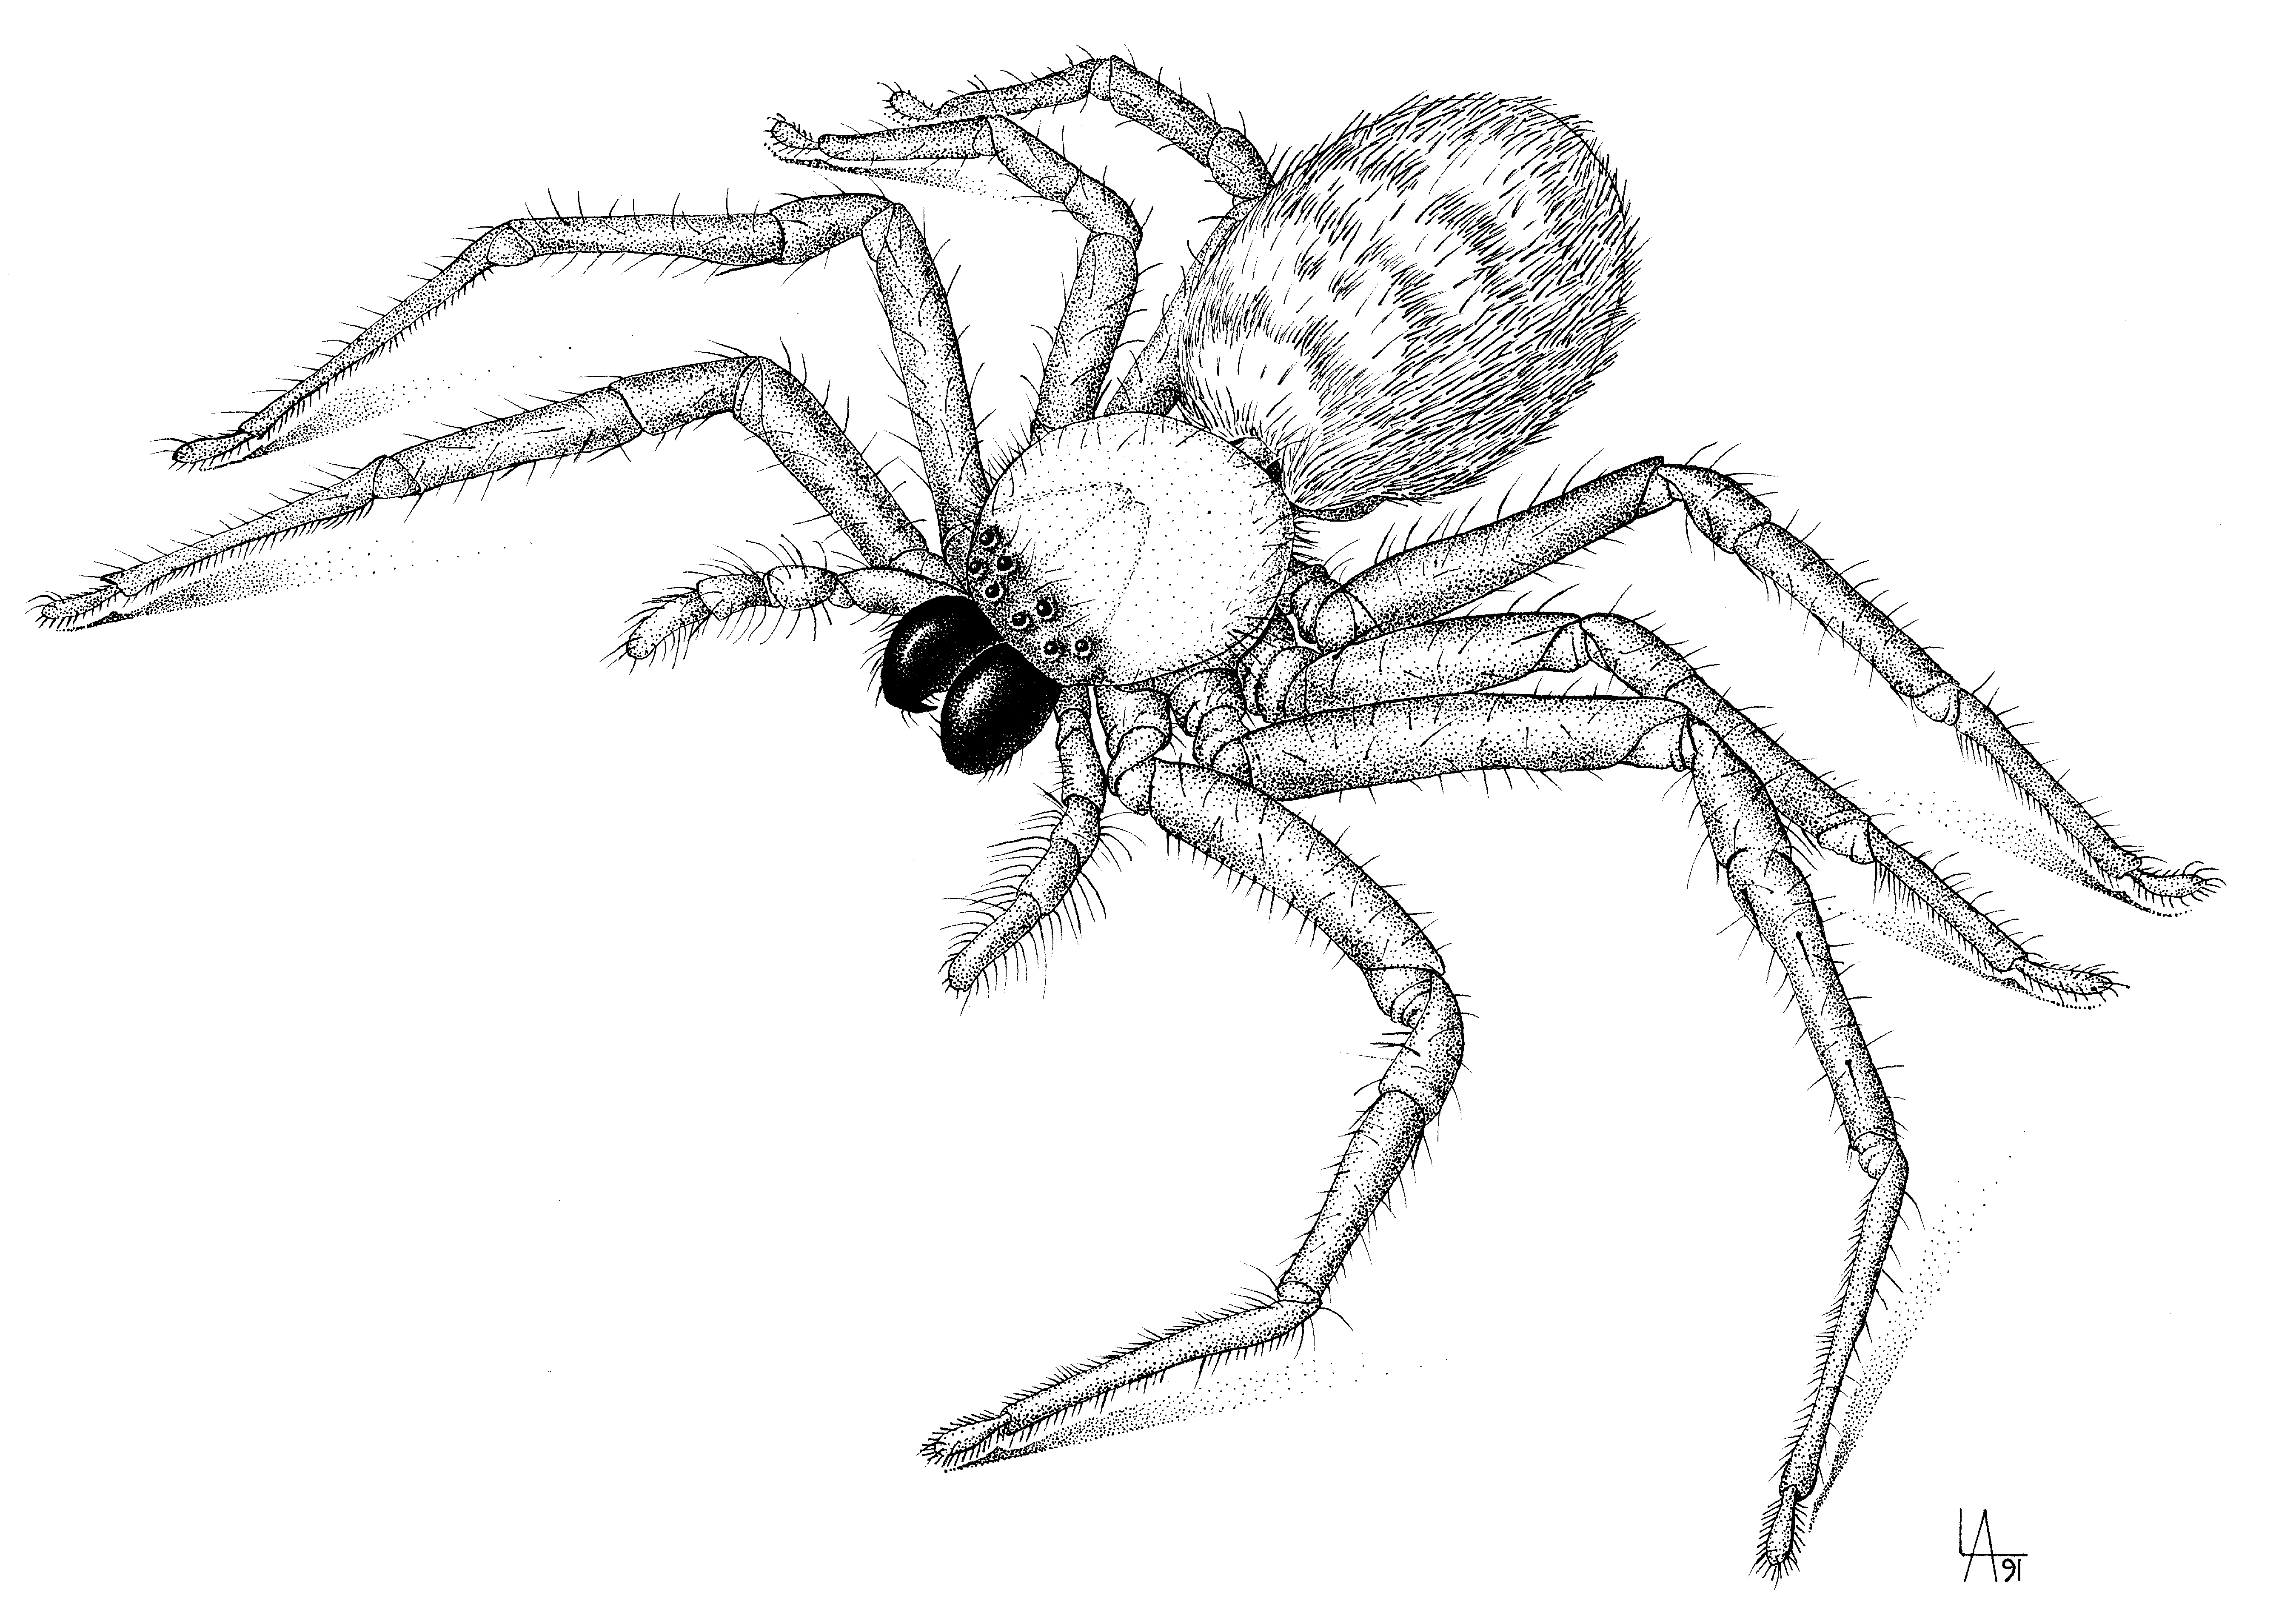 Spiders of Australia - Wikipedia